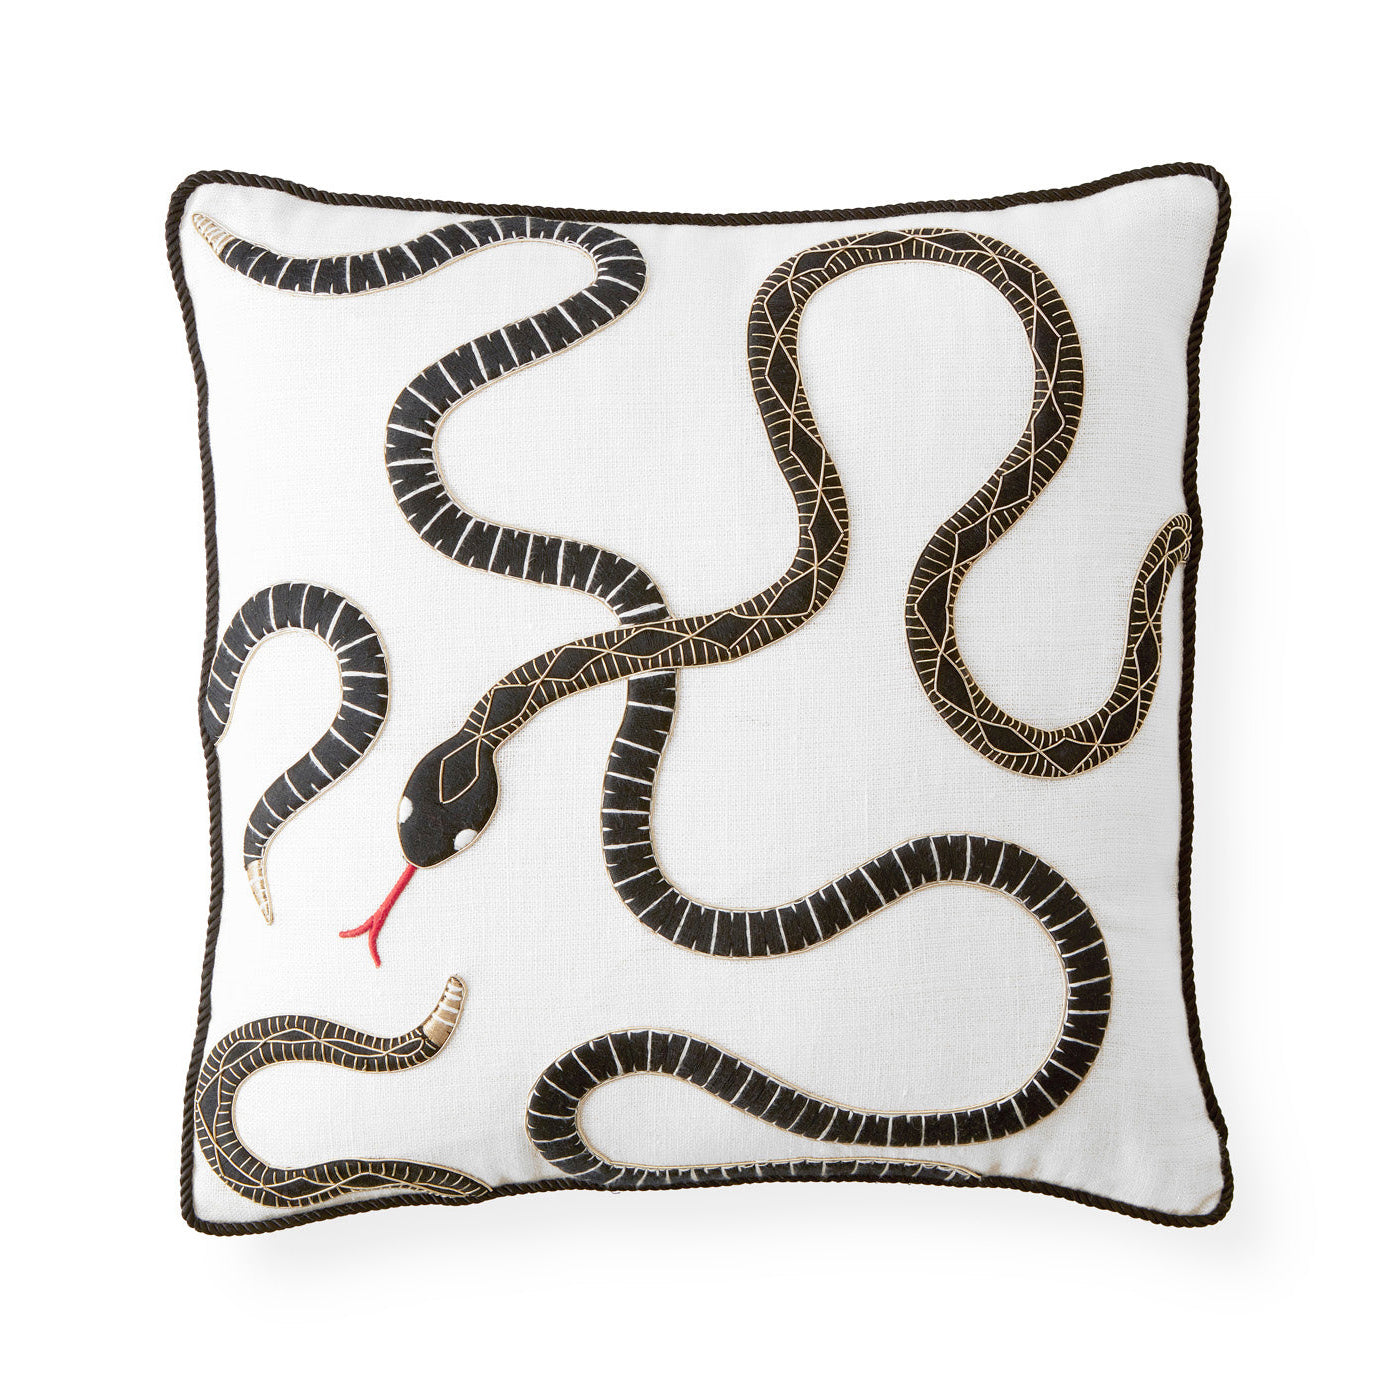 Johnathan Adler Zoology Gorilla Decorative Pillow Cover